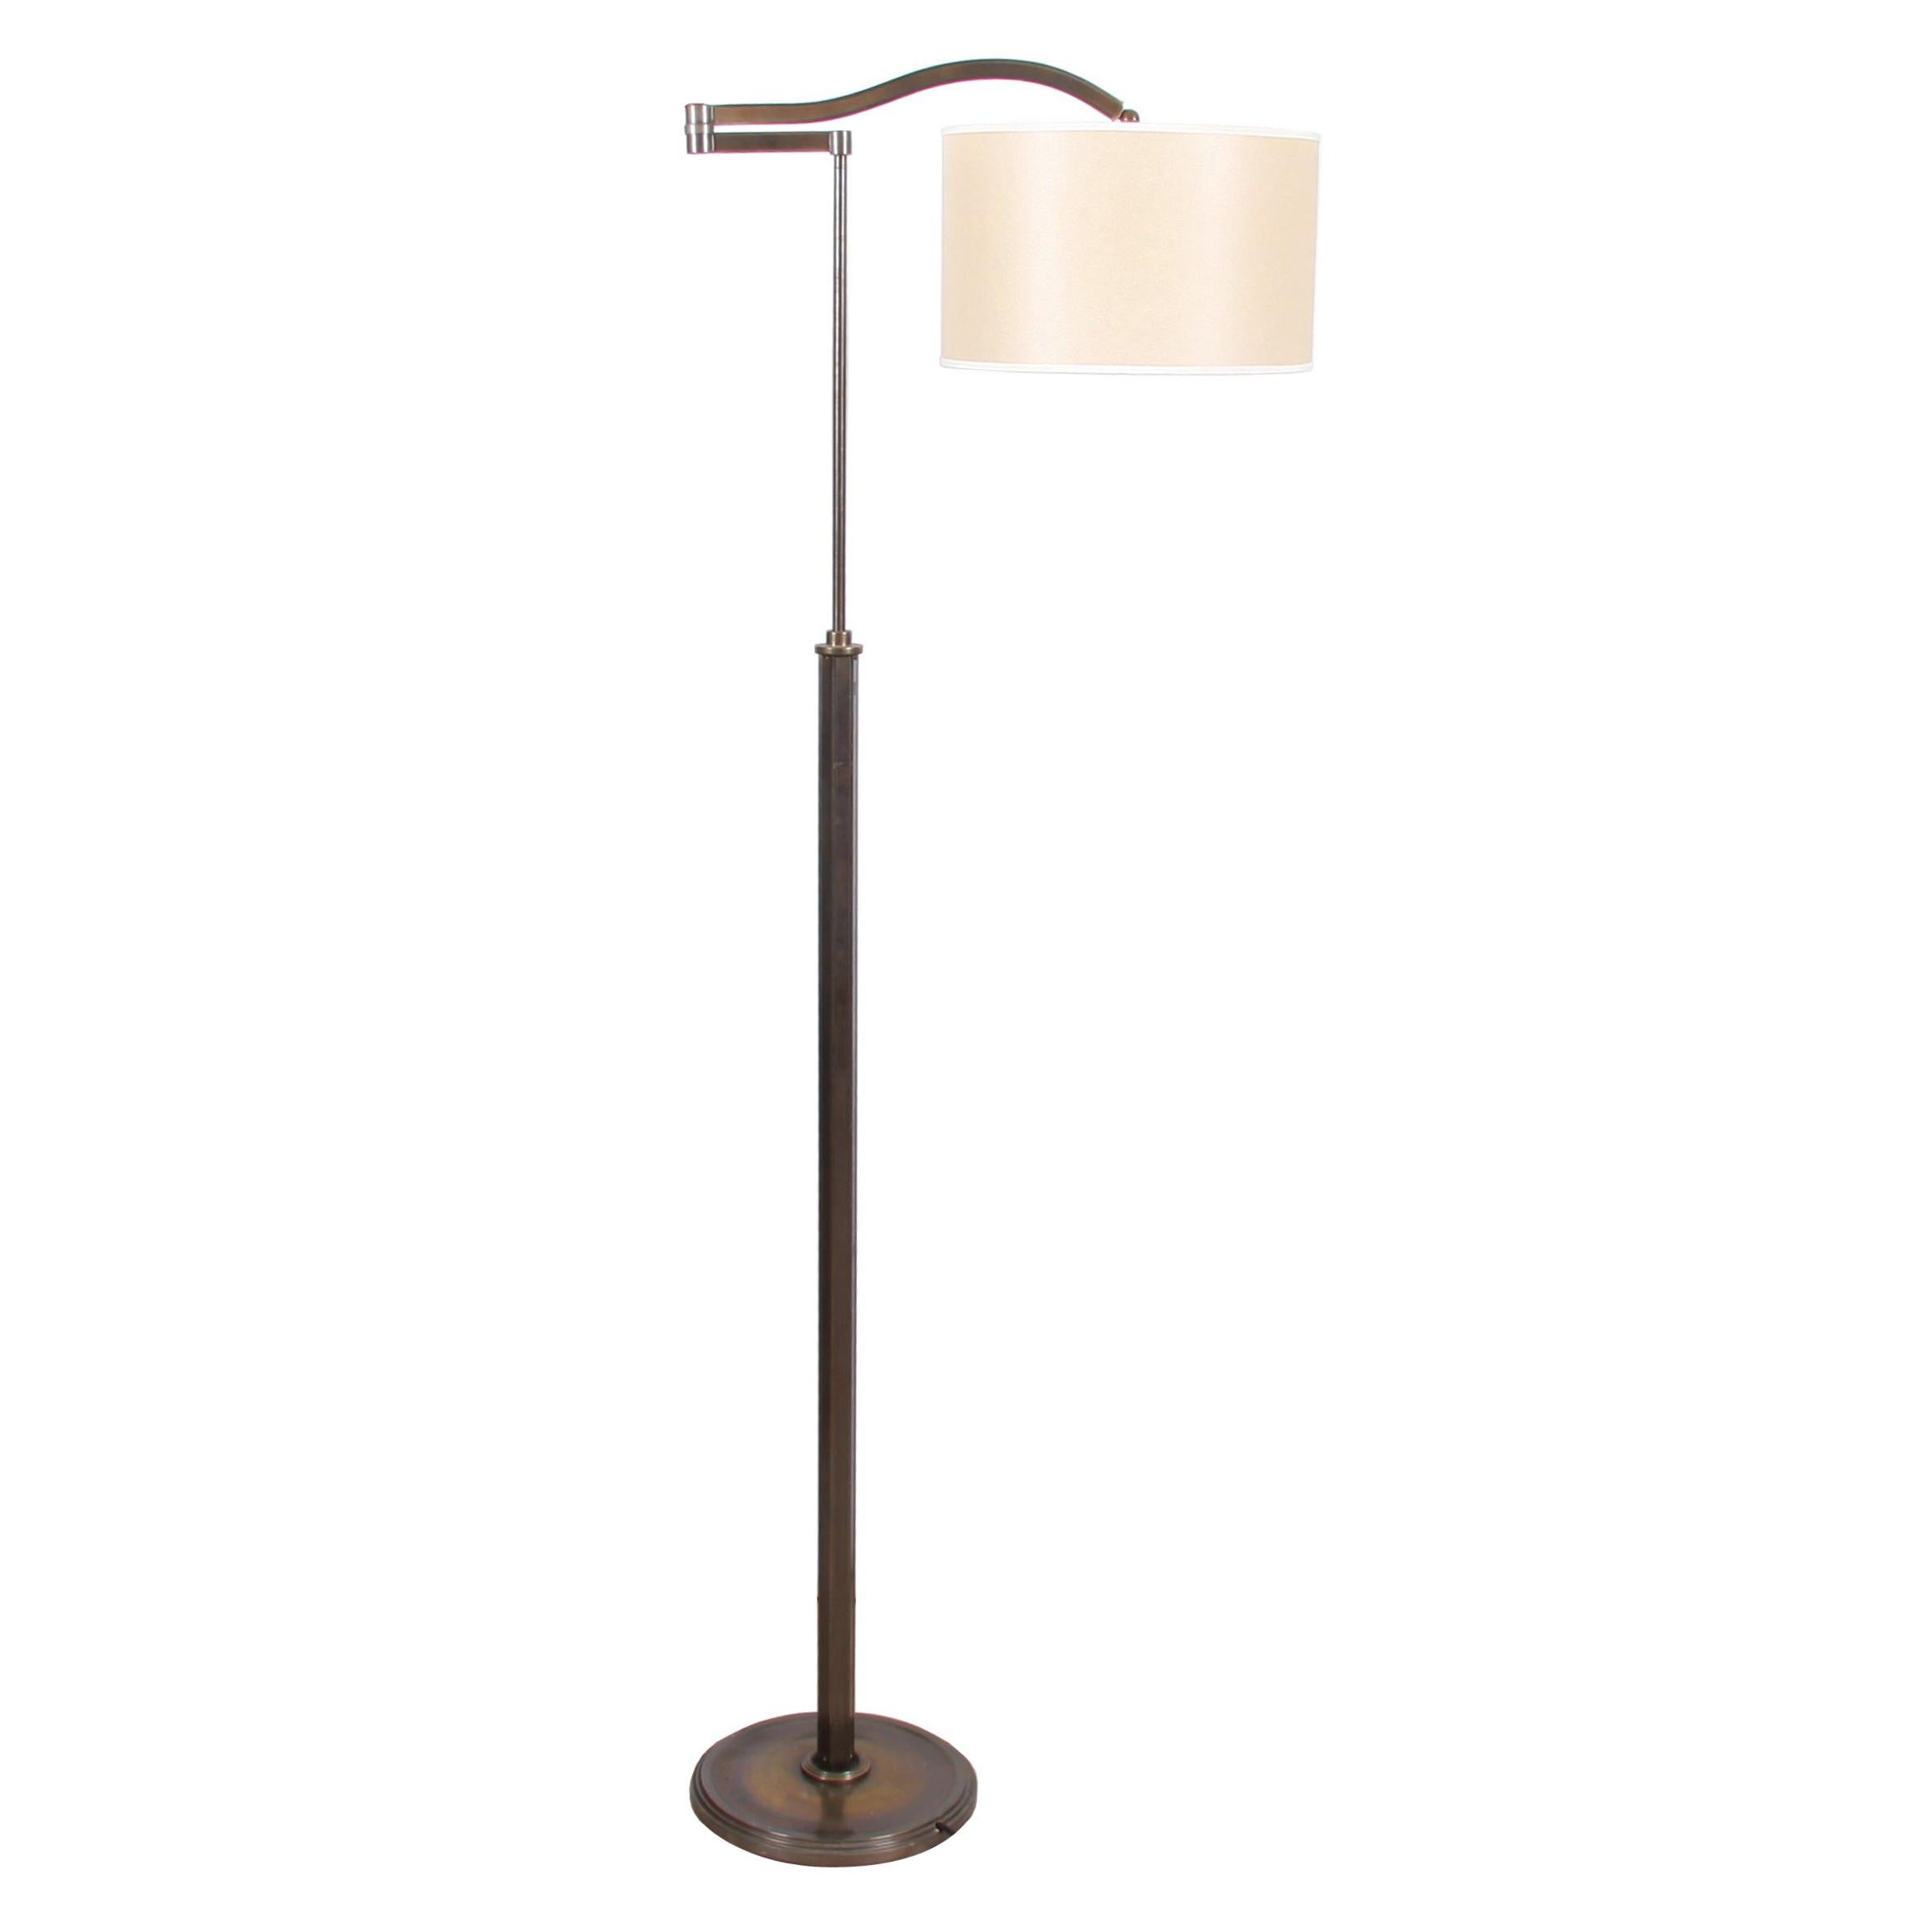 Italian 1950s Adjustable Swing Arm Floor Lamp